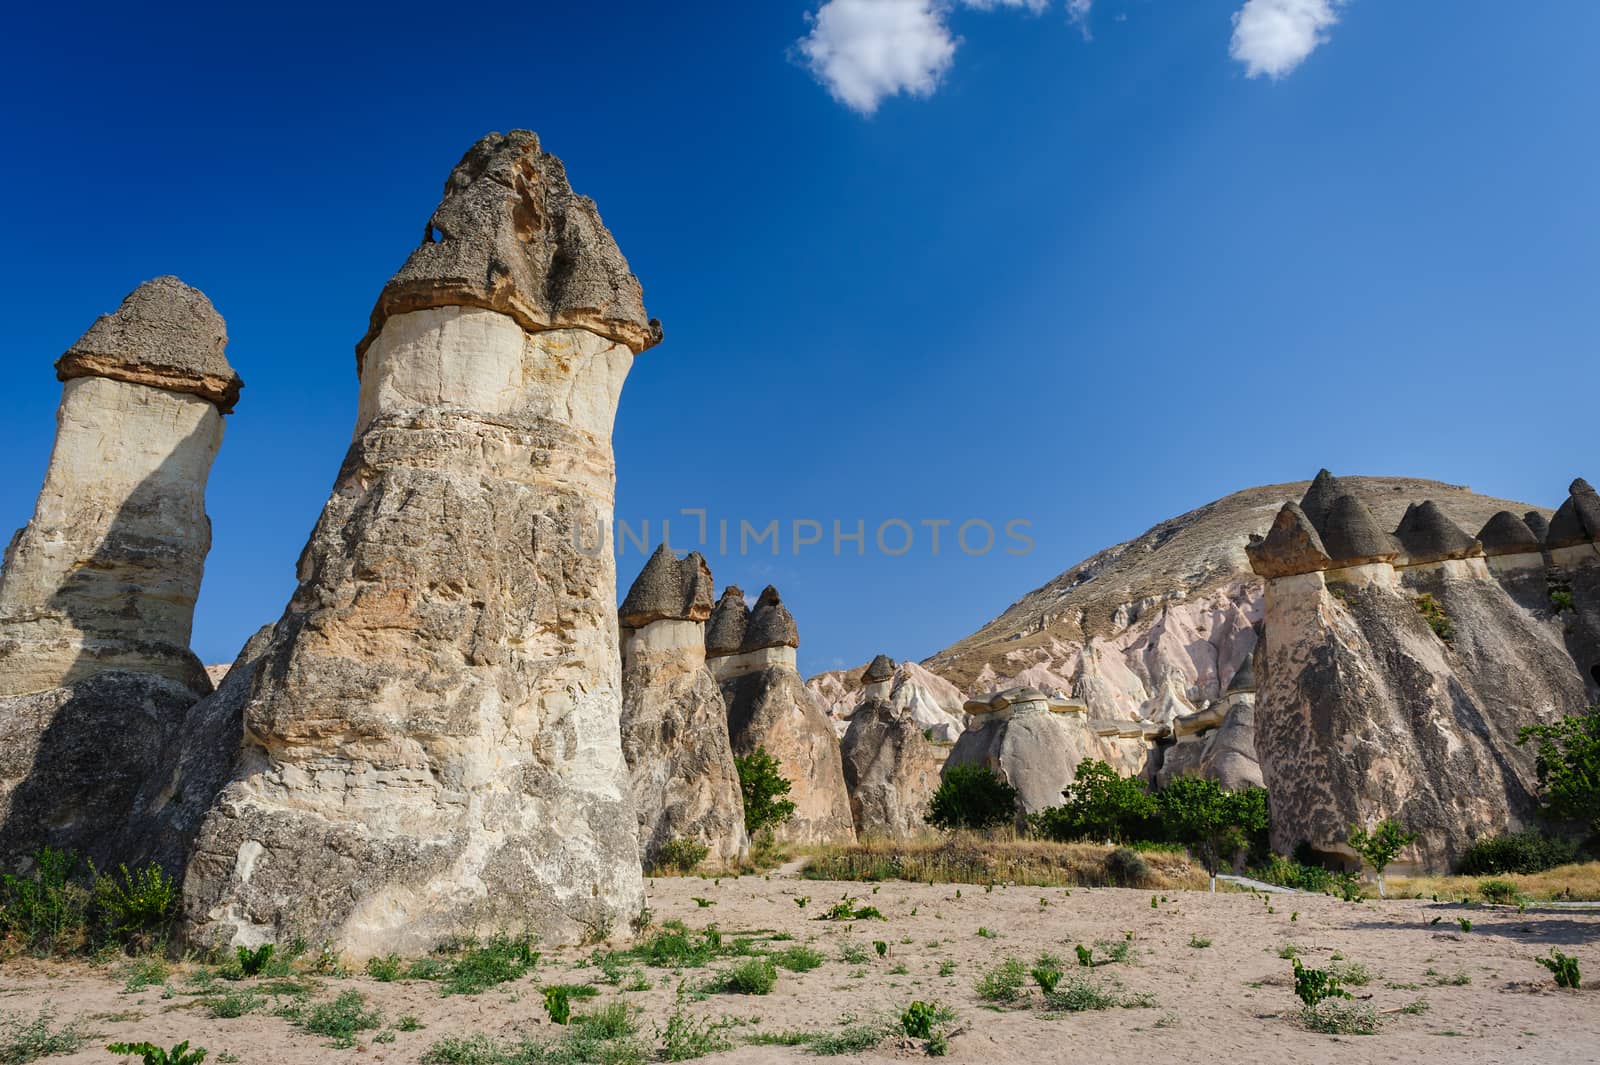 Bizzare rocks in Cappadocia, Turkey  by starush